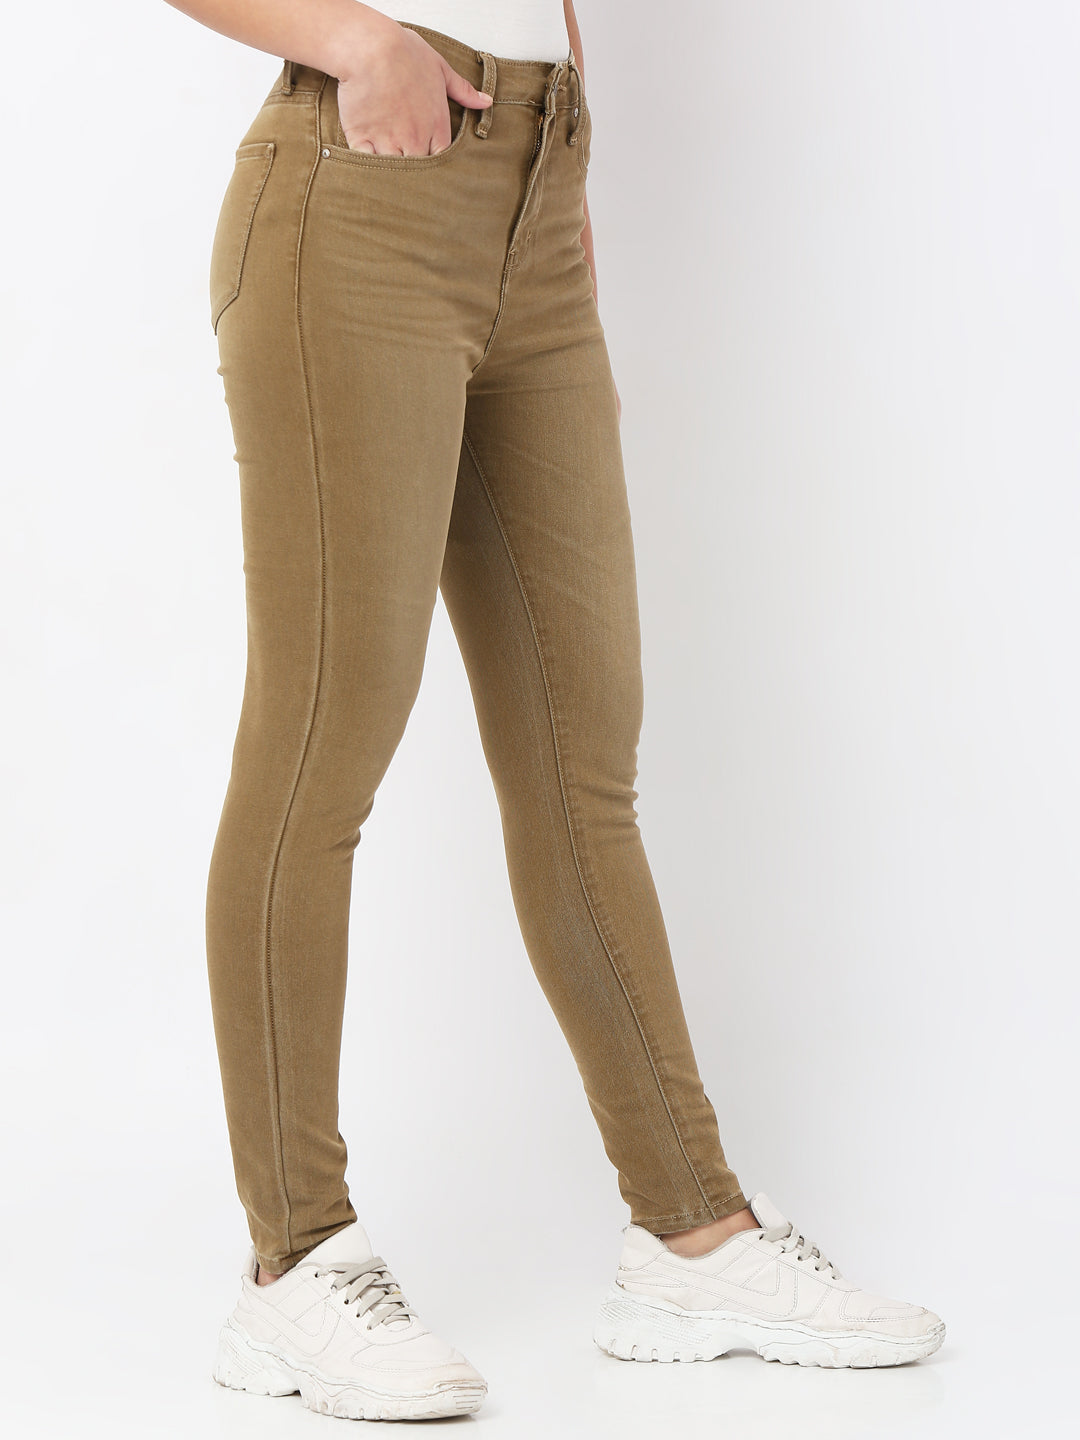 Spykar Women Light Khaki Cotton Super Skinny Ankle Length Jeans (Alexa)